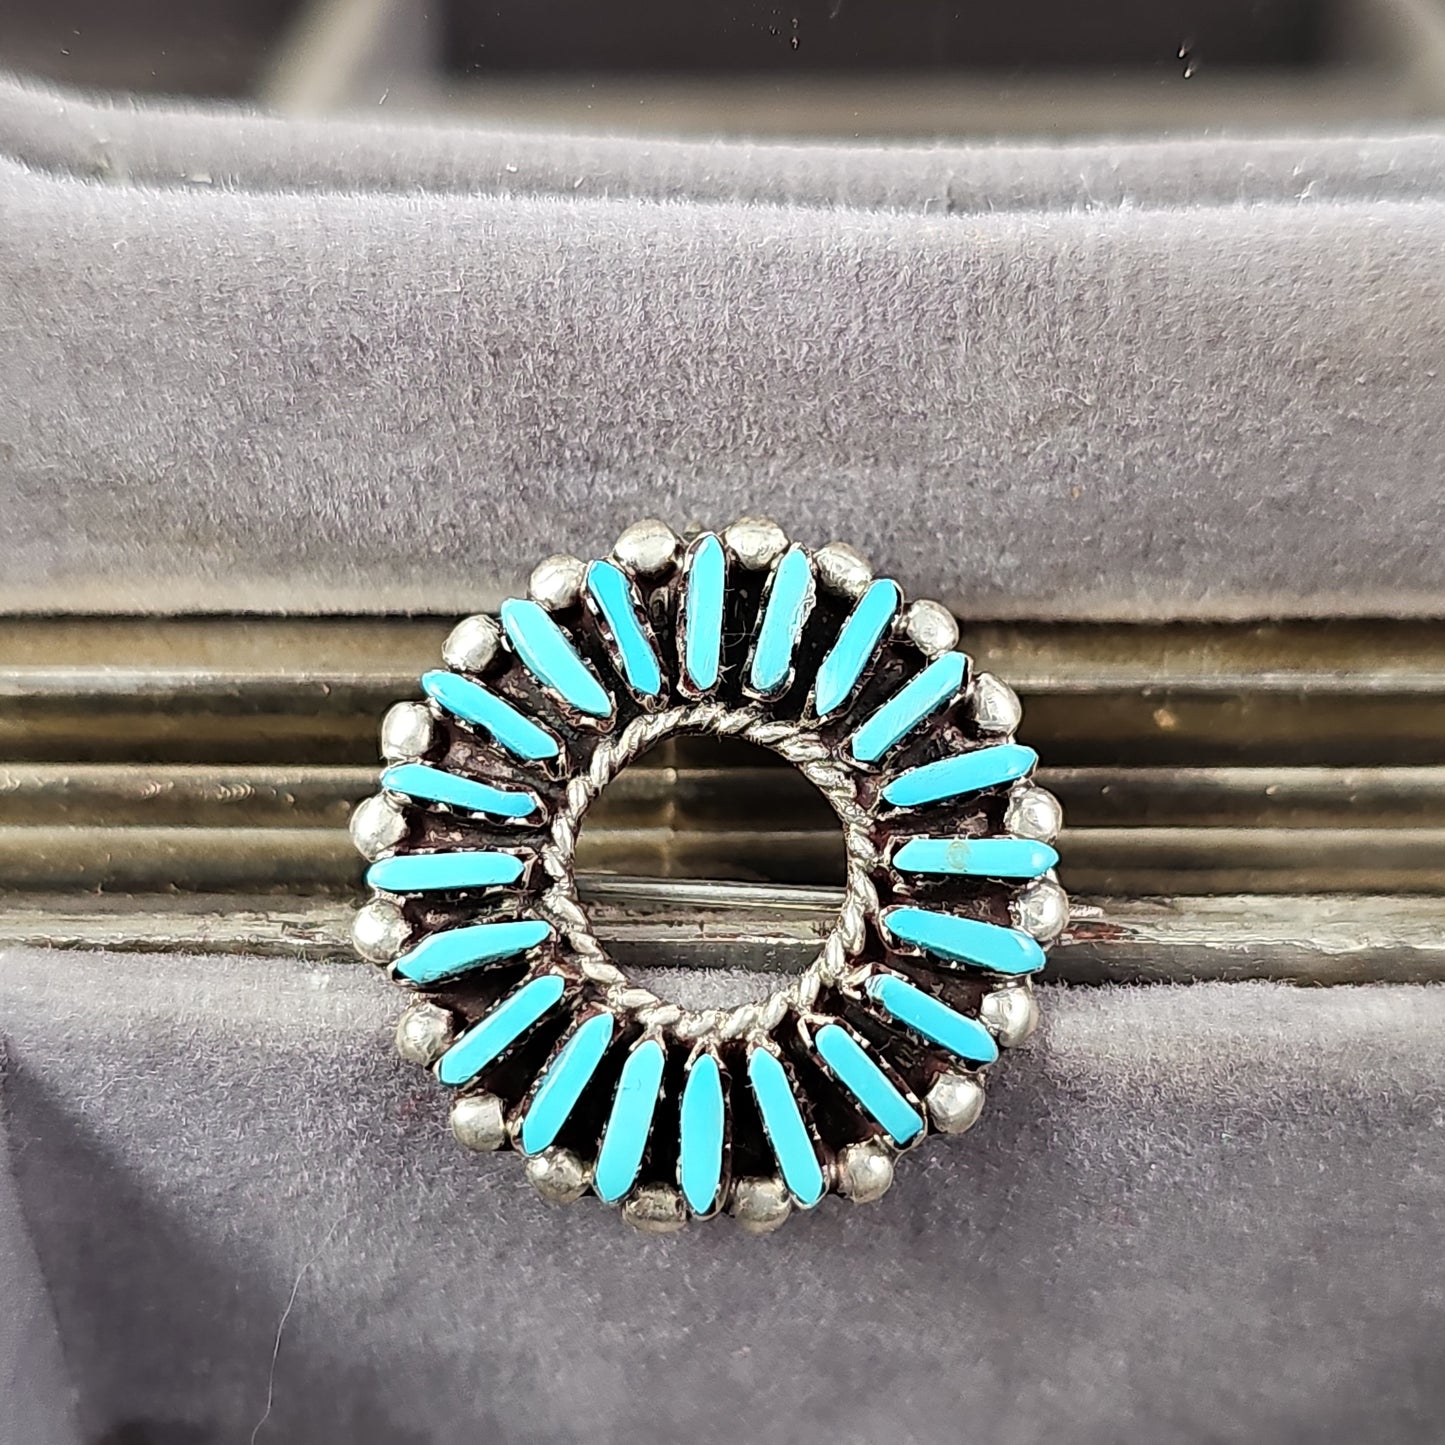 Zuni needlepoint pin or pendant